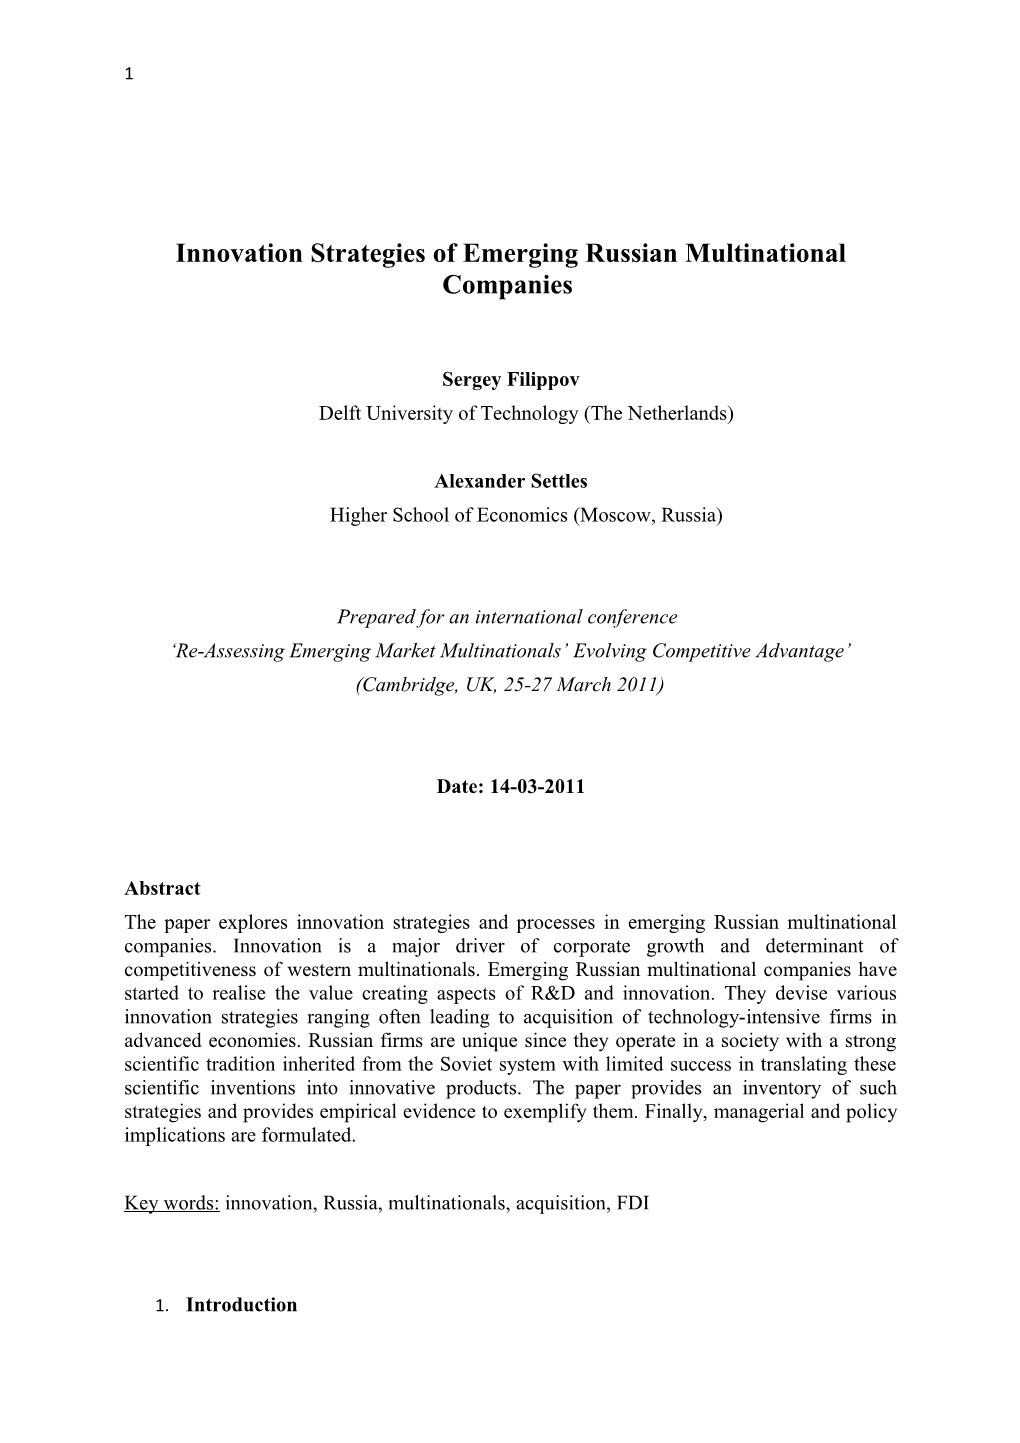 Innovation Strategies of Emerging Russian Multinational Companies